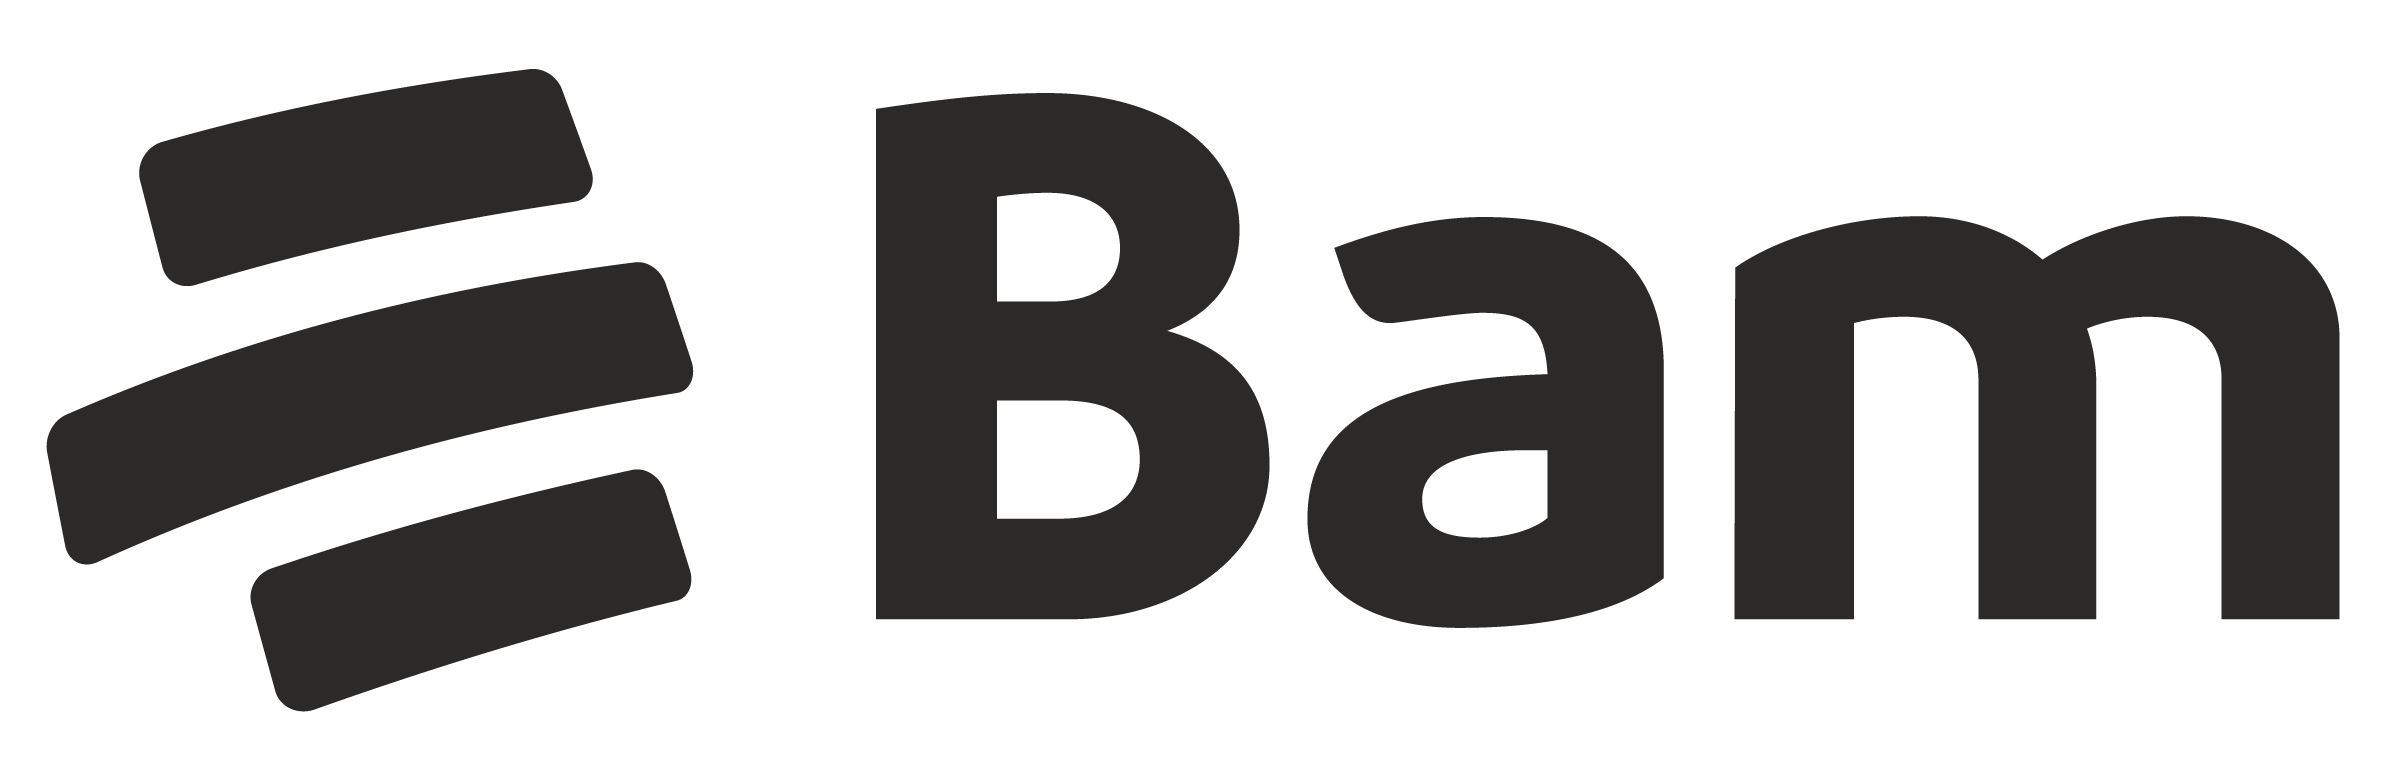 BAM_logotipoprimariopositivo_RGB_V1